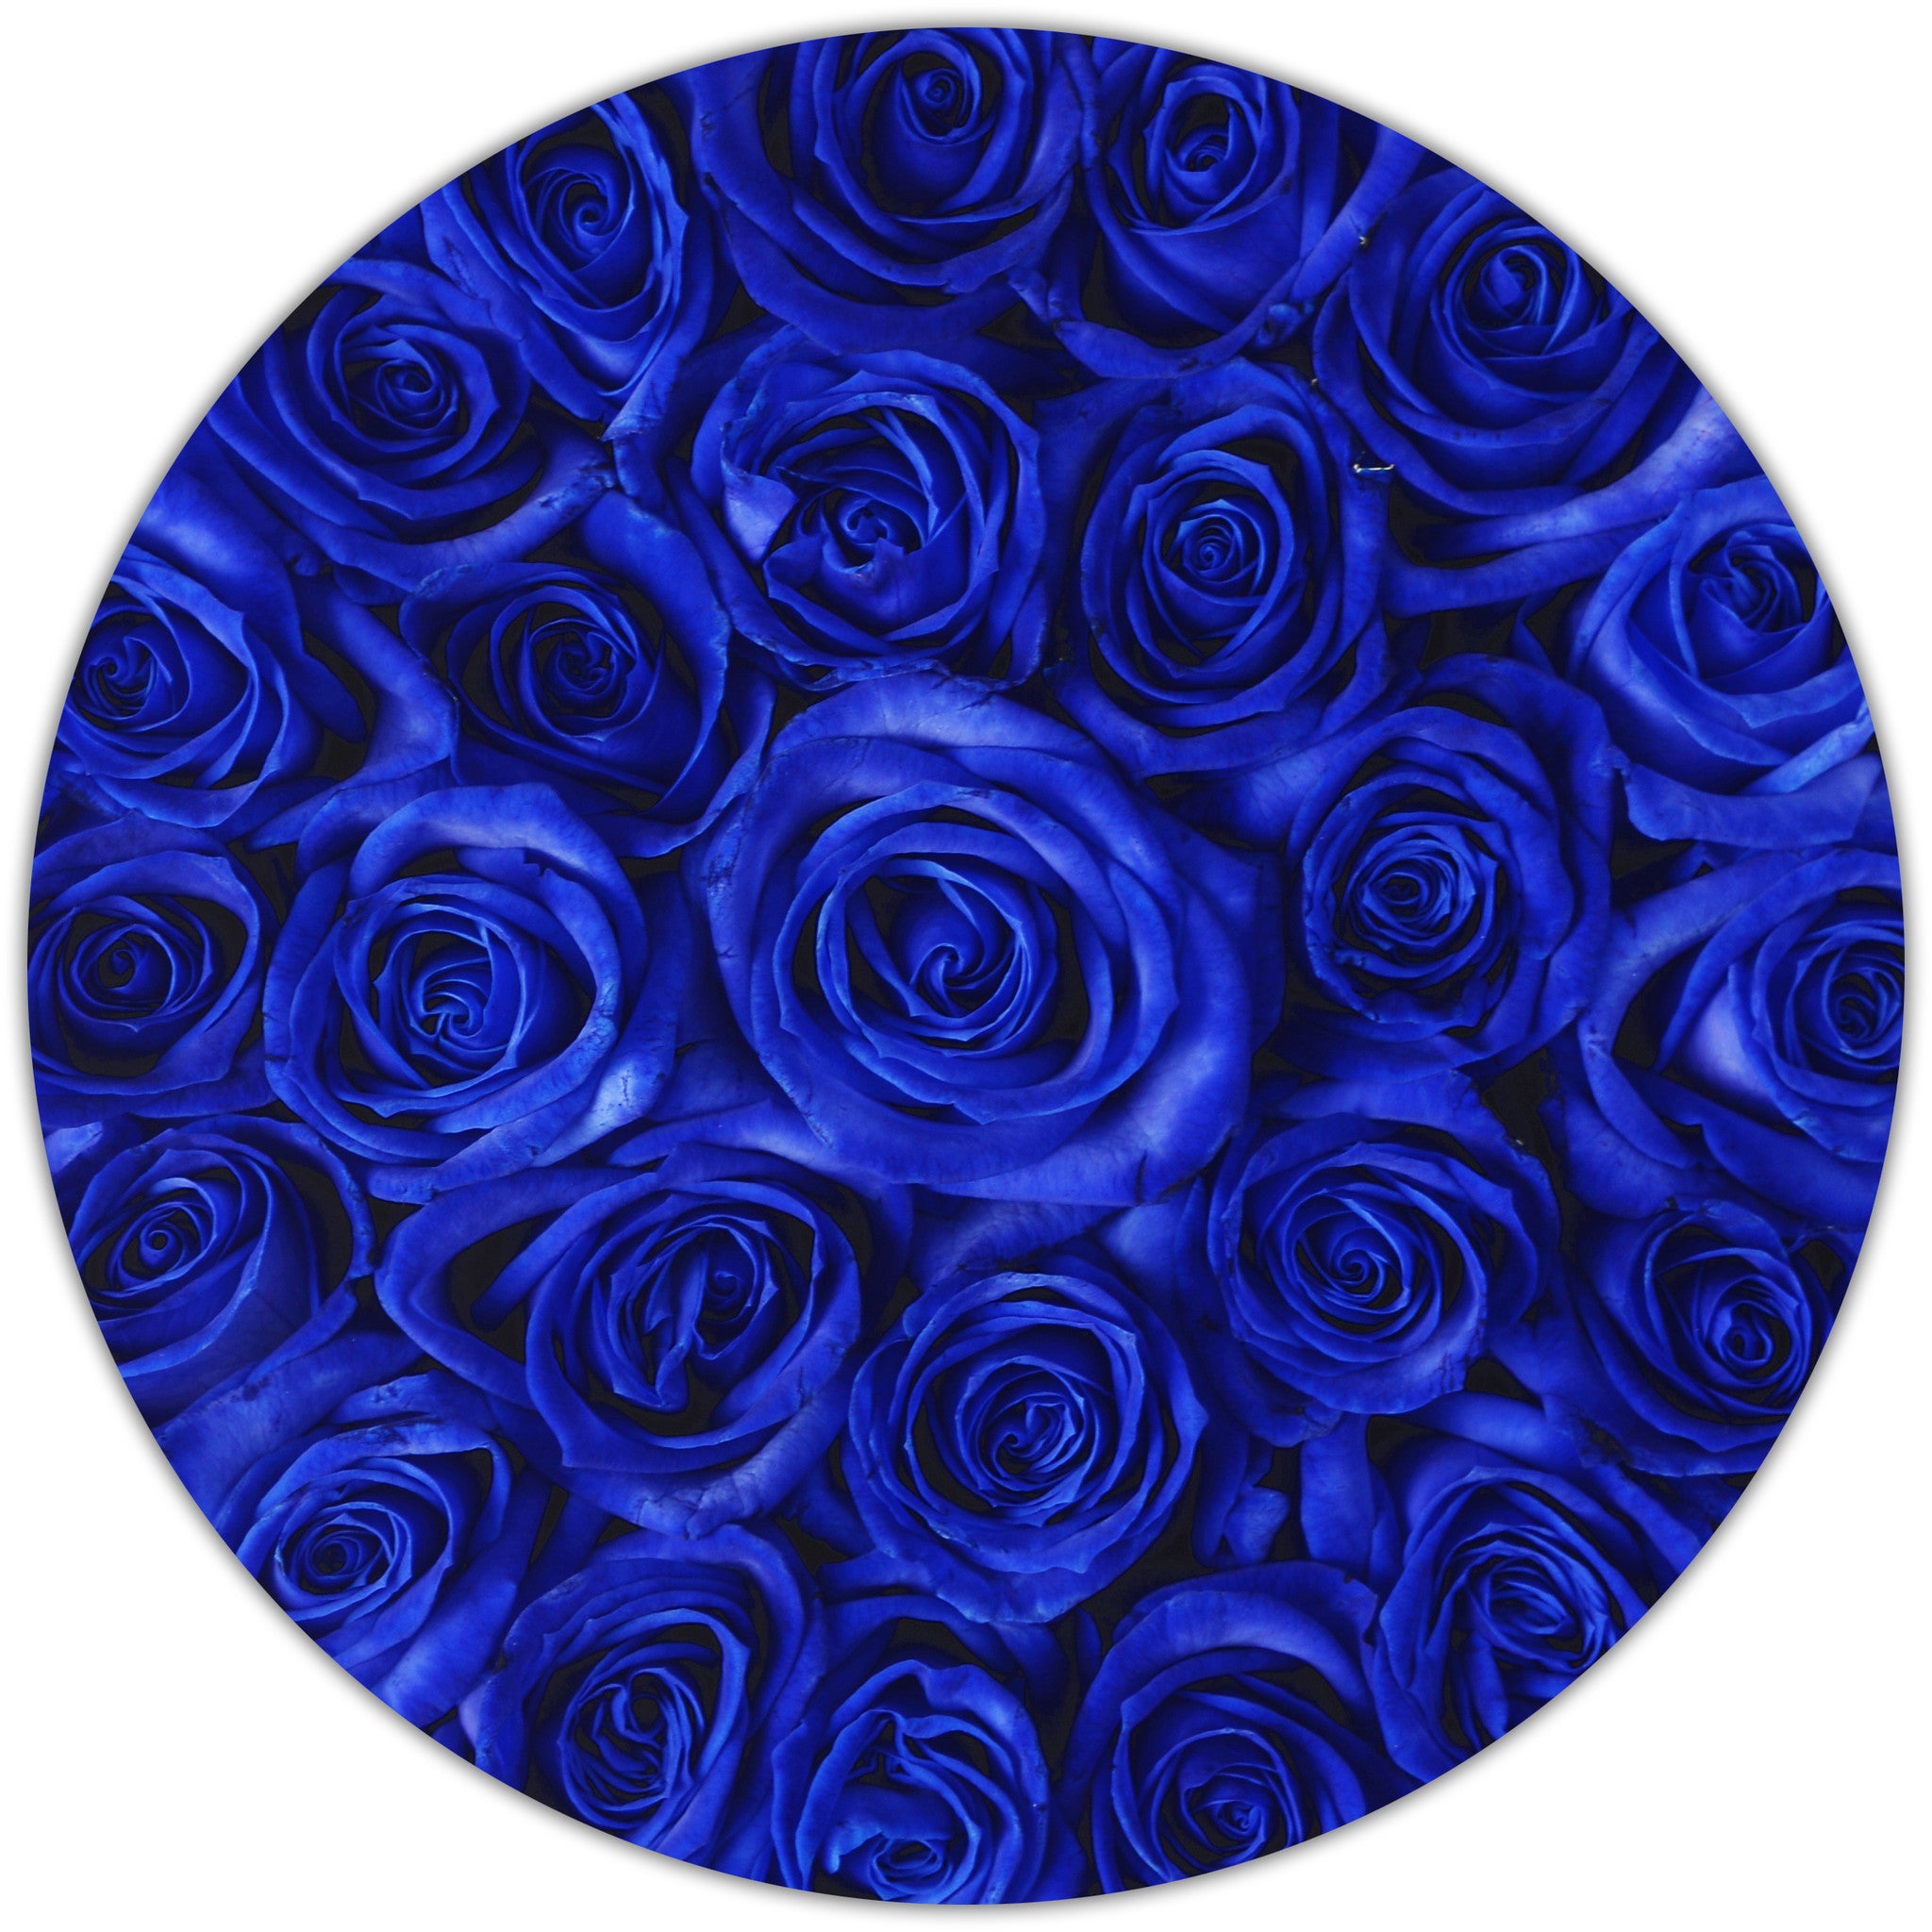 Small - Blue Roses - White Box - The Million Roses Budapest